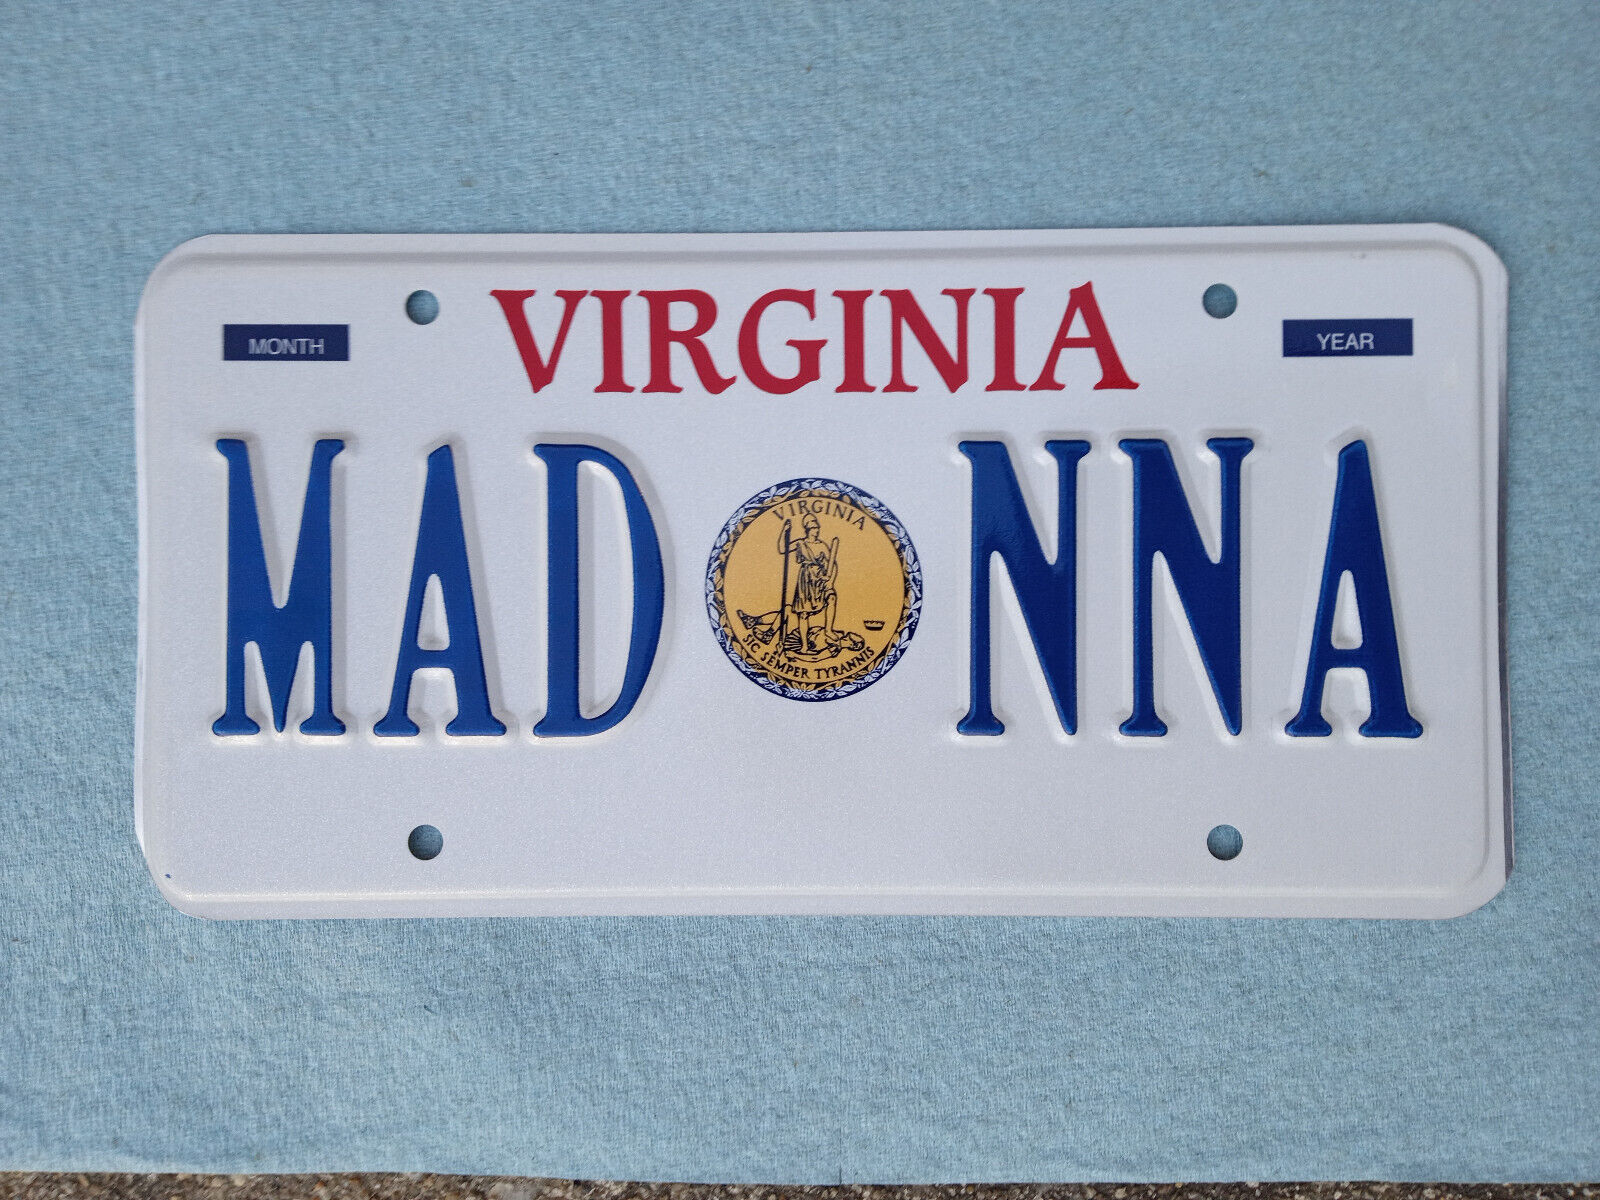 Expired Virginia Vanity License Plate MADONNA (MAD NNA) Celebrity Pop Icon